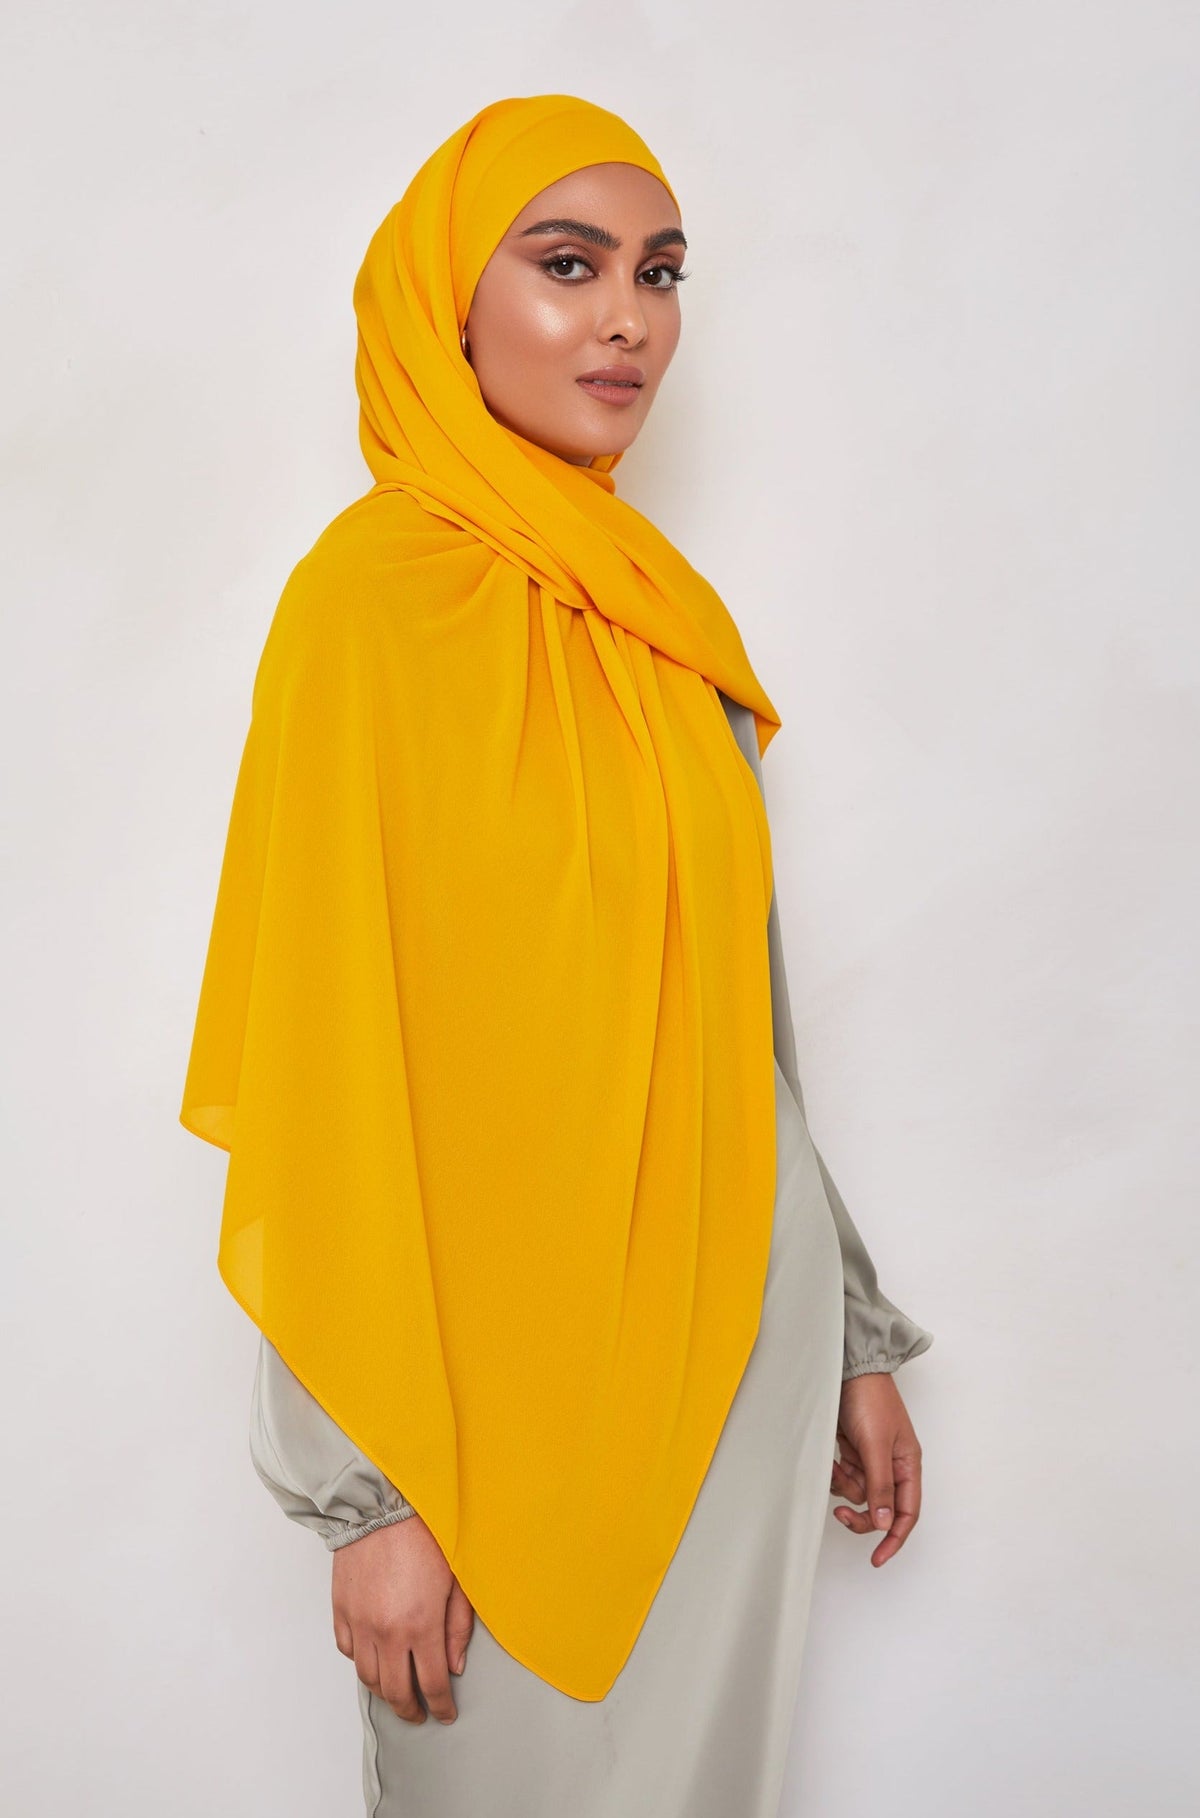 TEXTURE Everyday Chiffon Hijab - Mango epschoolboard 